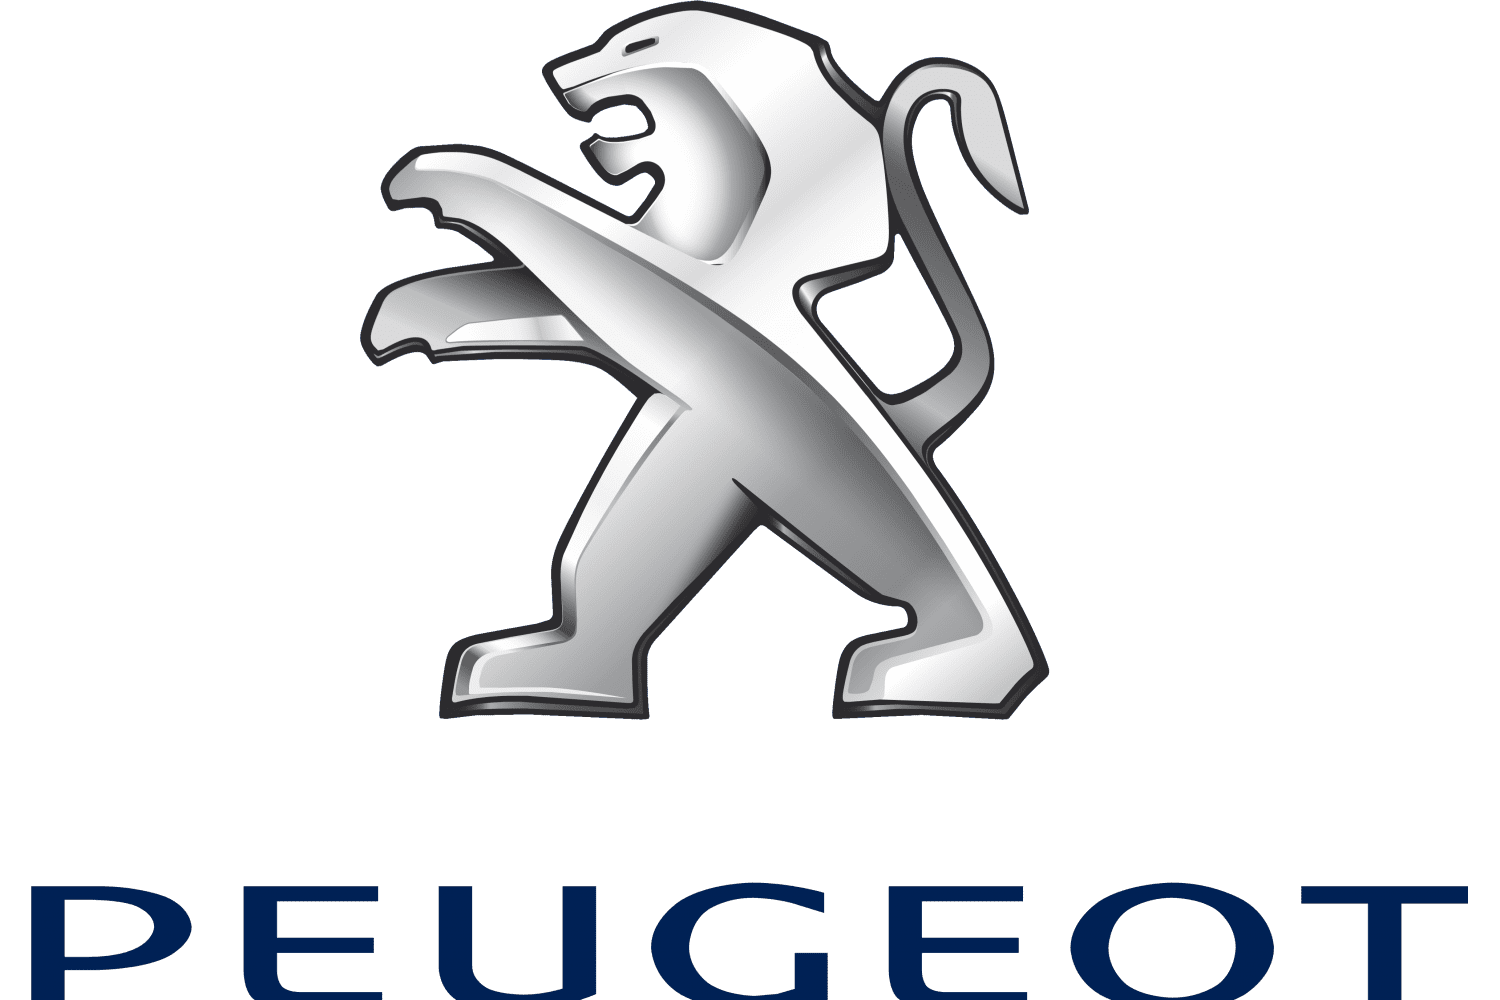 Peugeot-logo